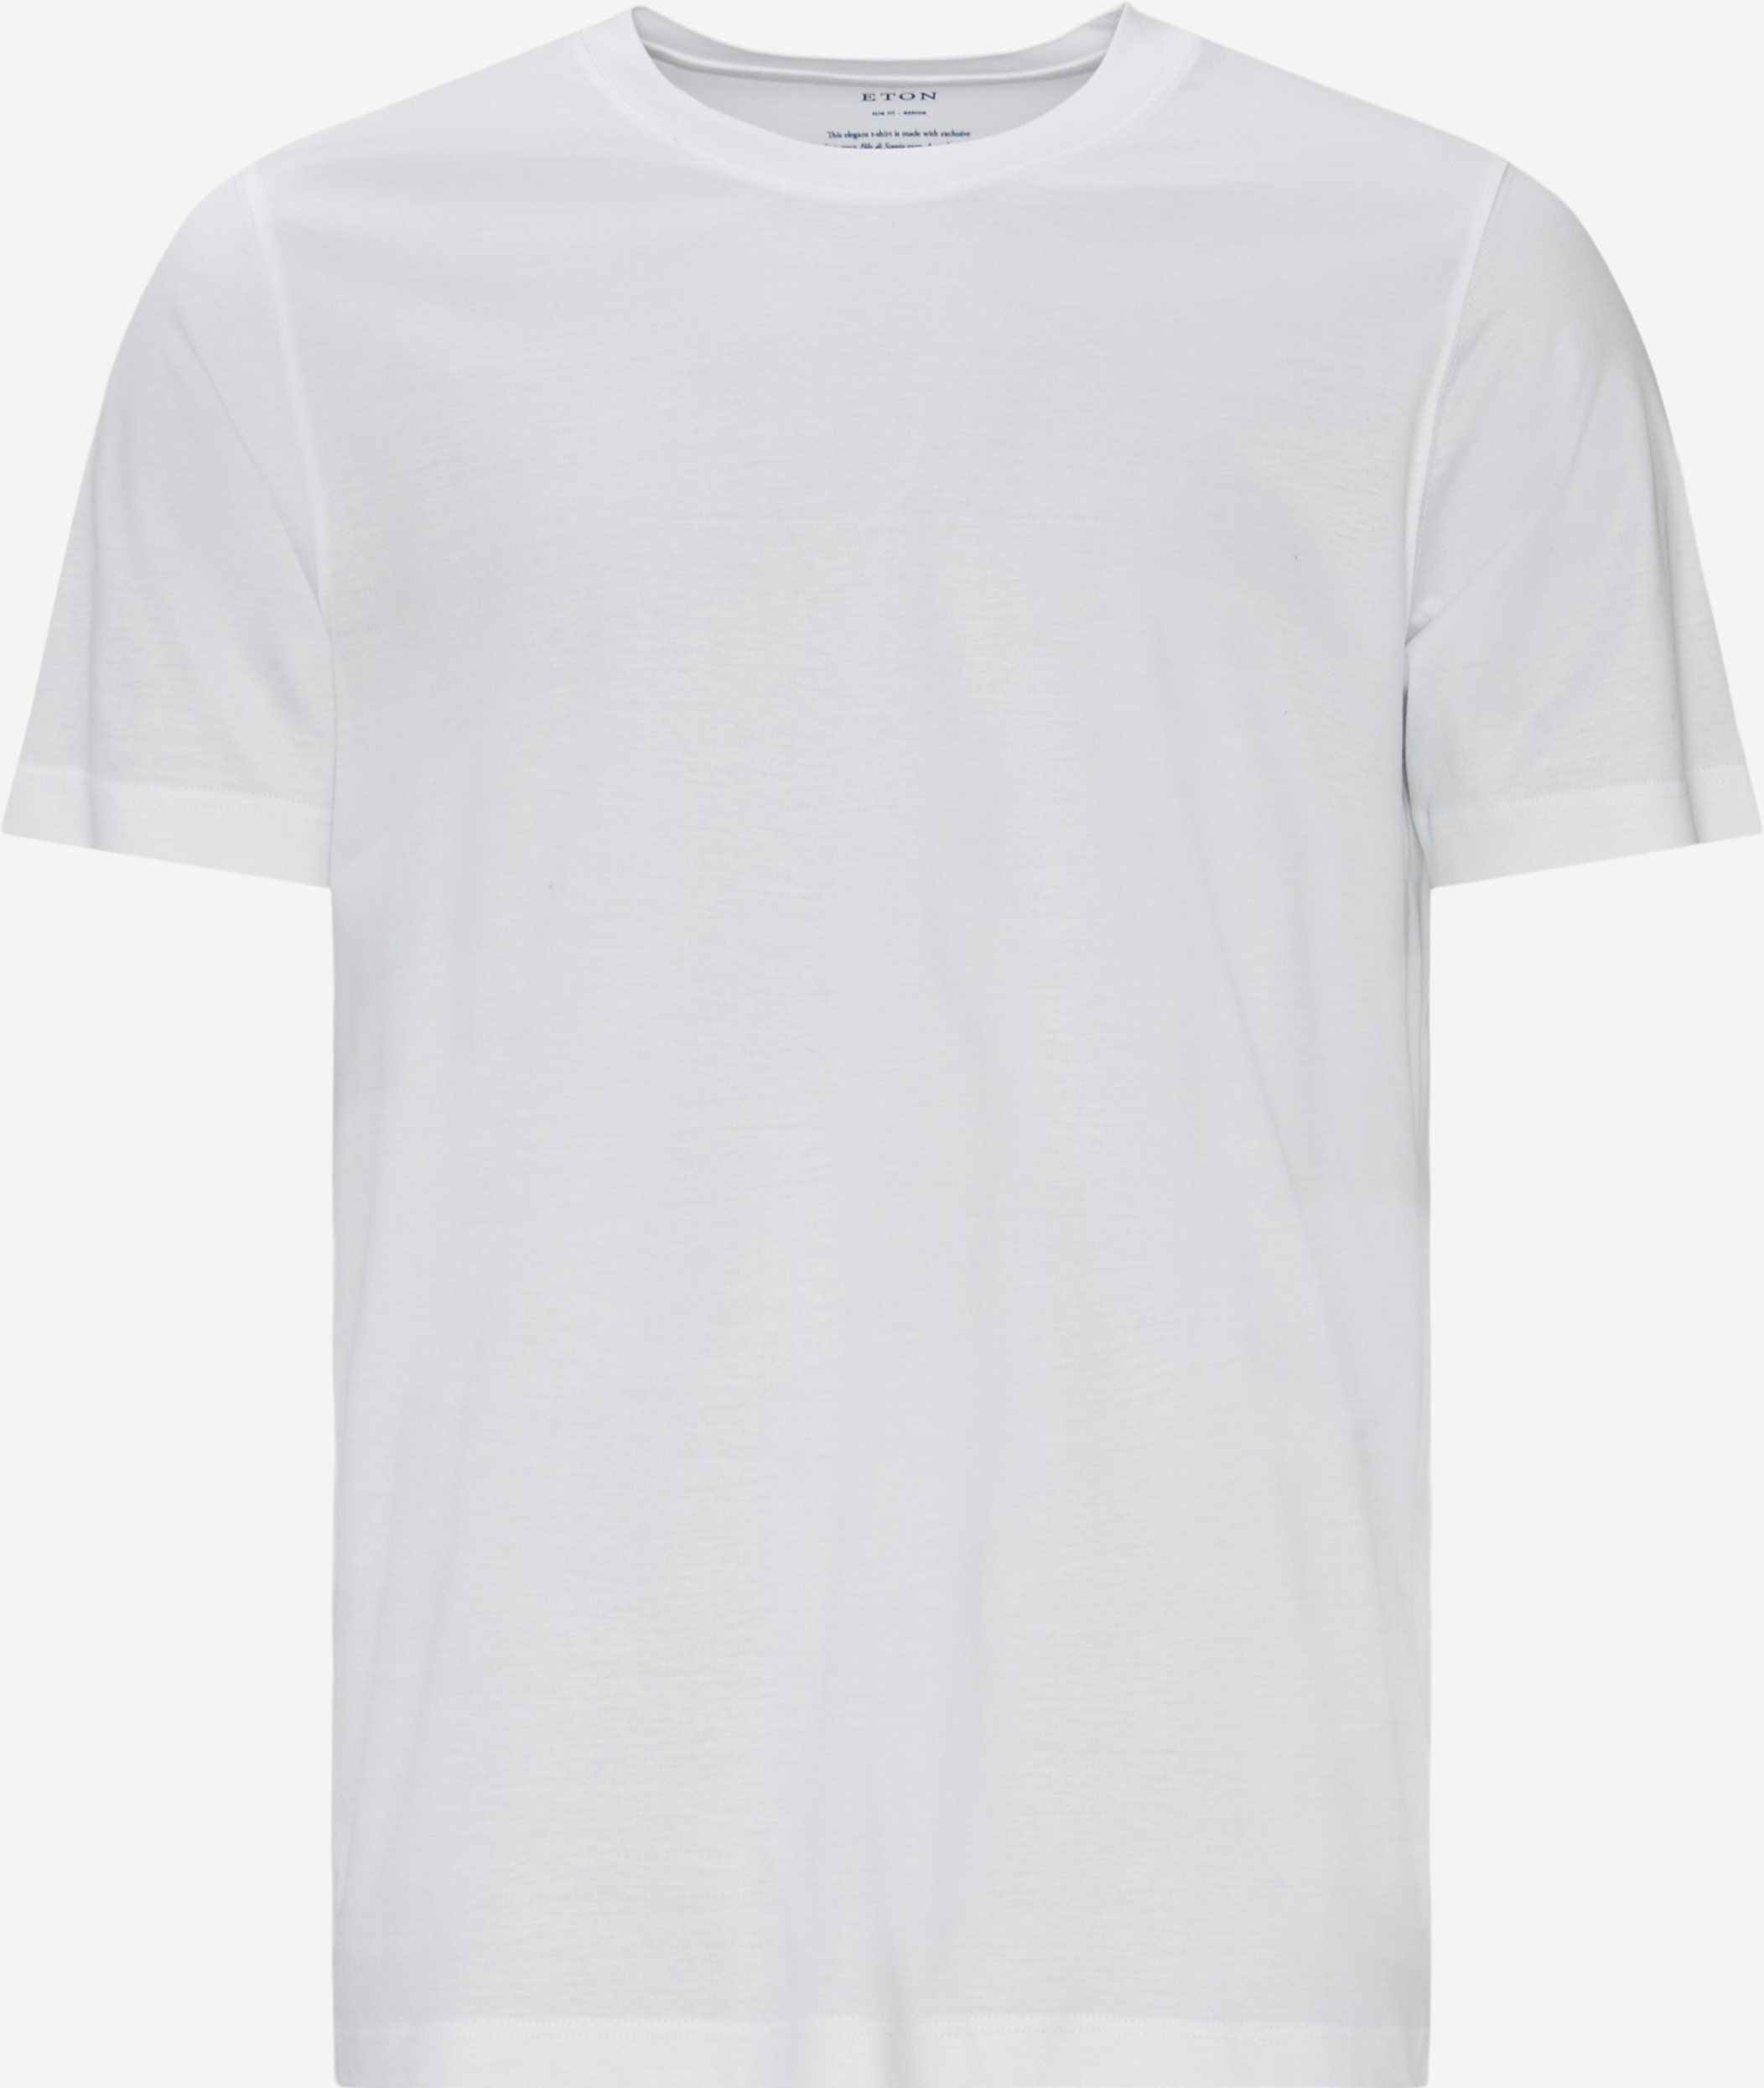 0592 T-shirt - T-shirts - Slim fit - Hvid